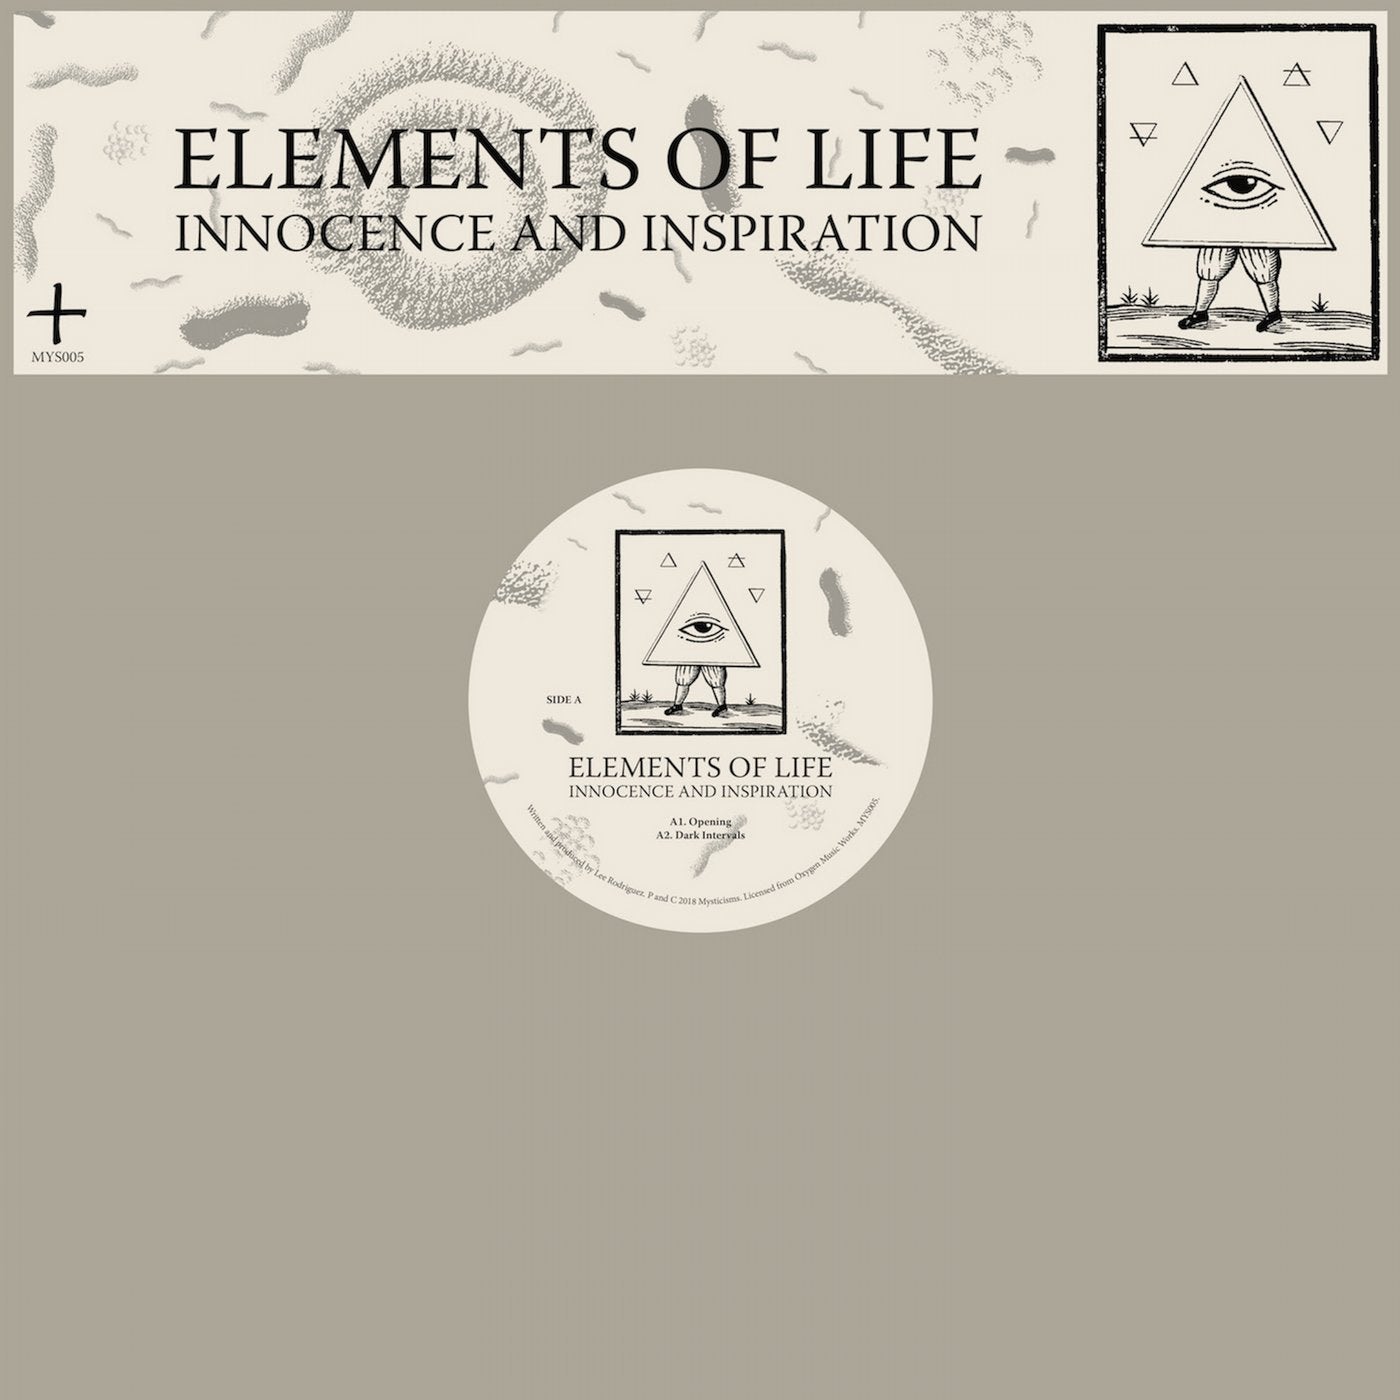 Elements of Life Innocence inspiration. Lives of Innocence. Elements of life